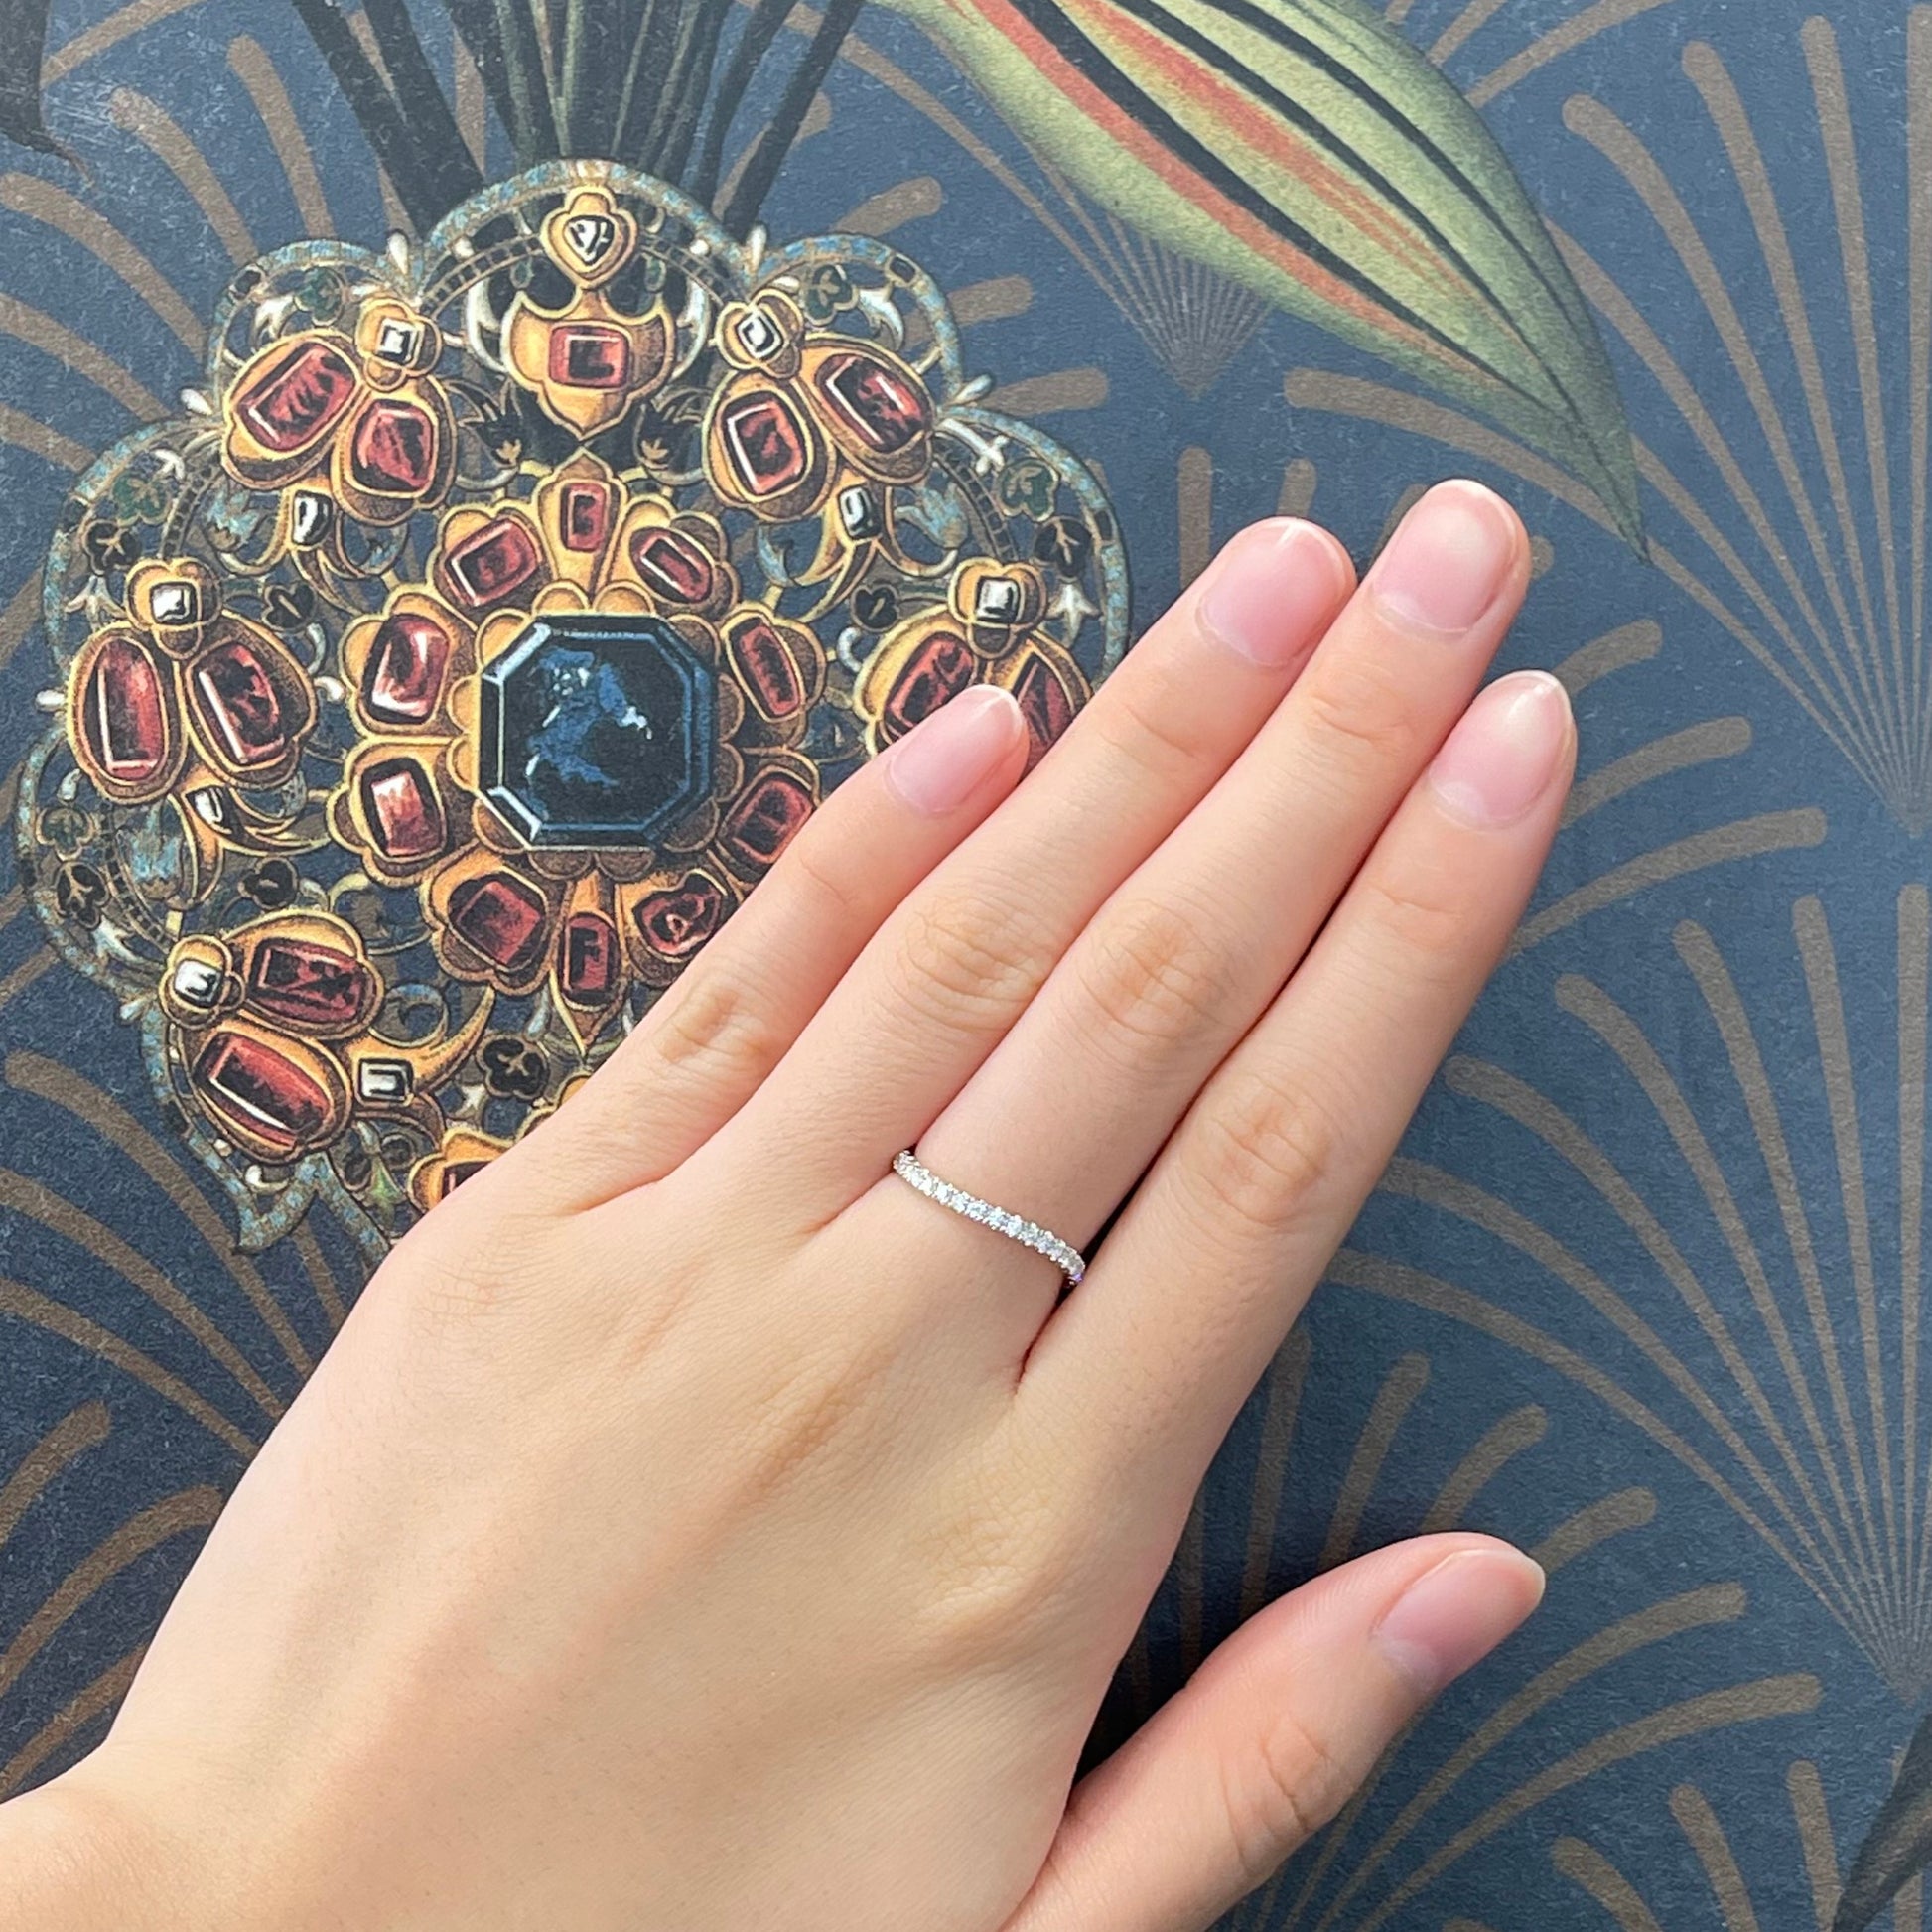 18k白金鑽石線戒在中指上 18k White Gold Wavy Diamond Ring on middle finger